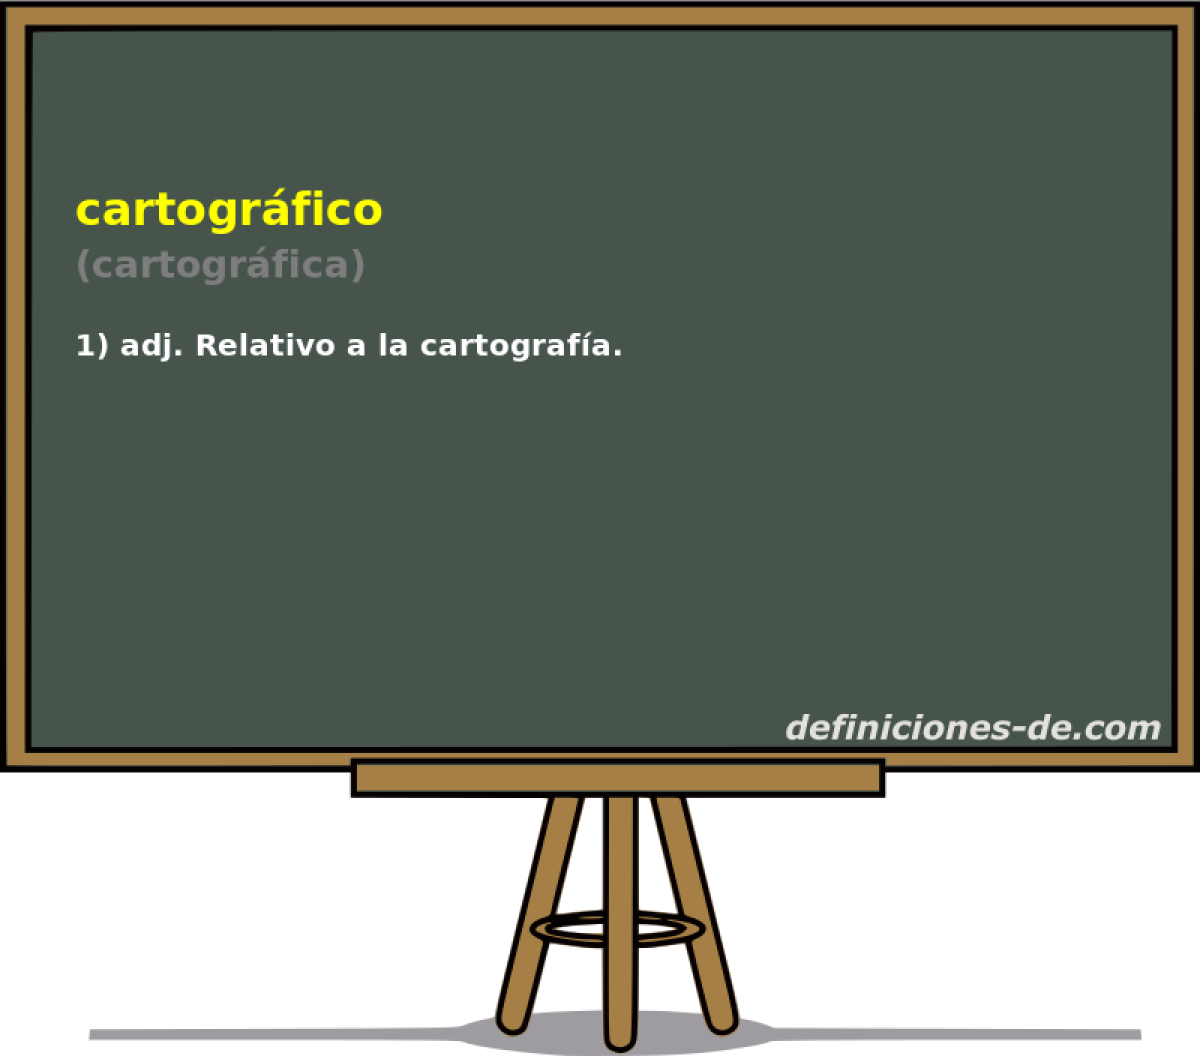 cartogrfico (cartogrfica)